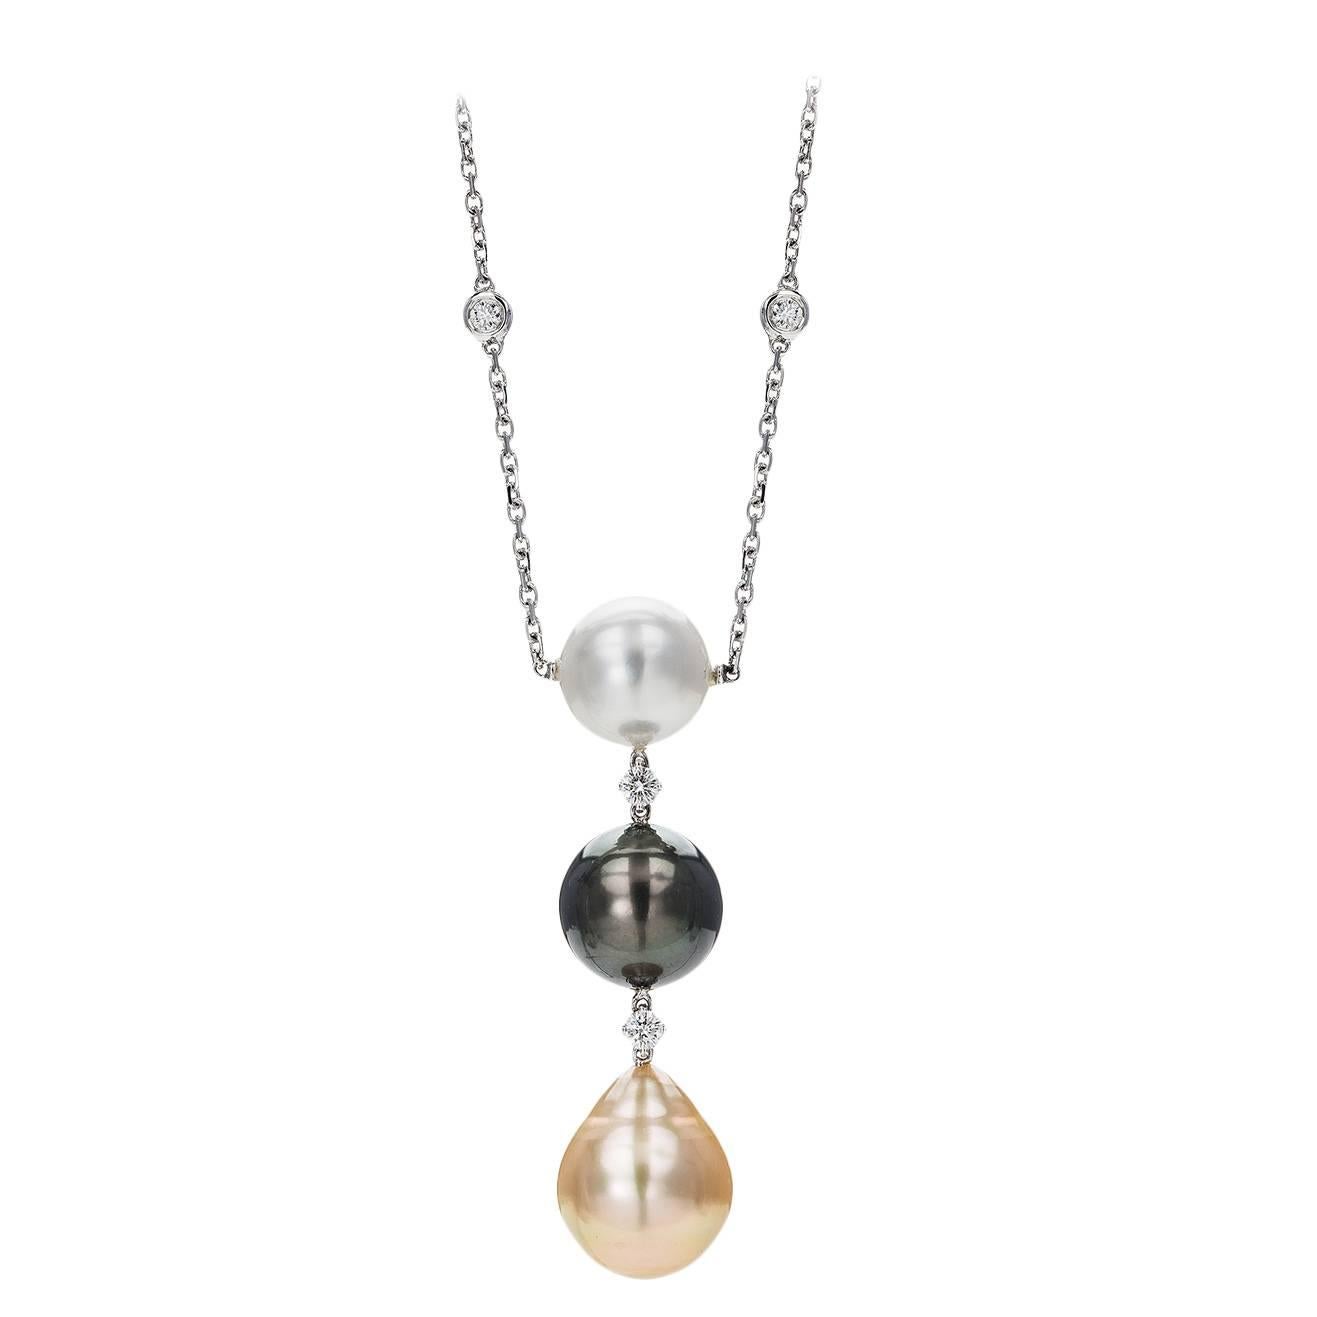 3 Drop White Black Golden South Sea Pearl Pendant Necklace For Sale